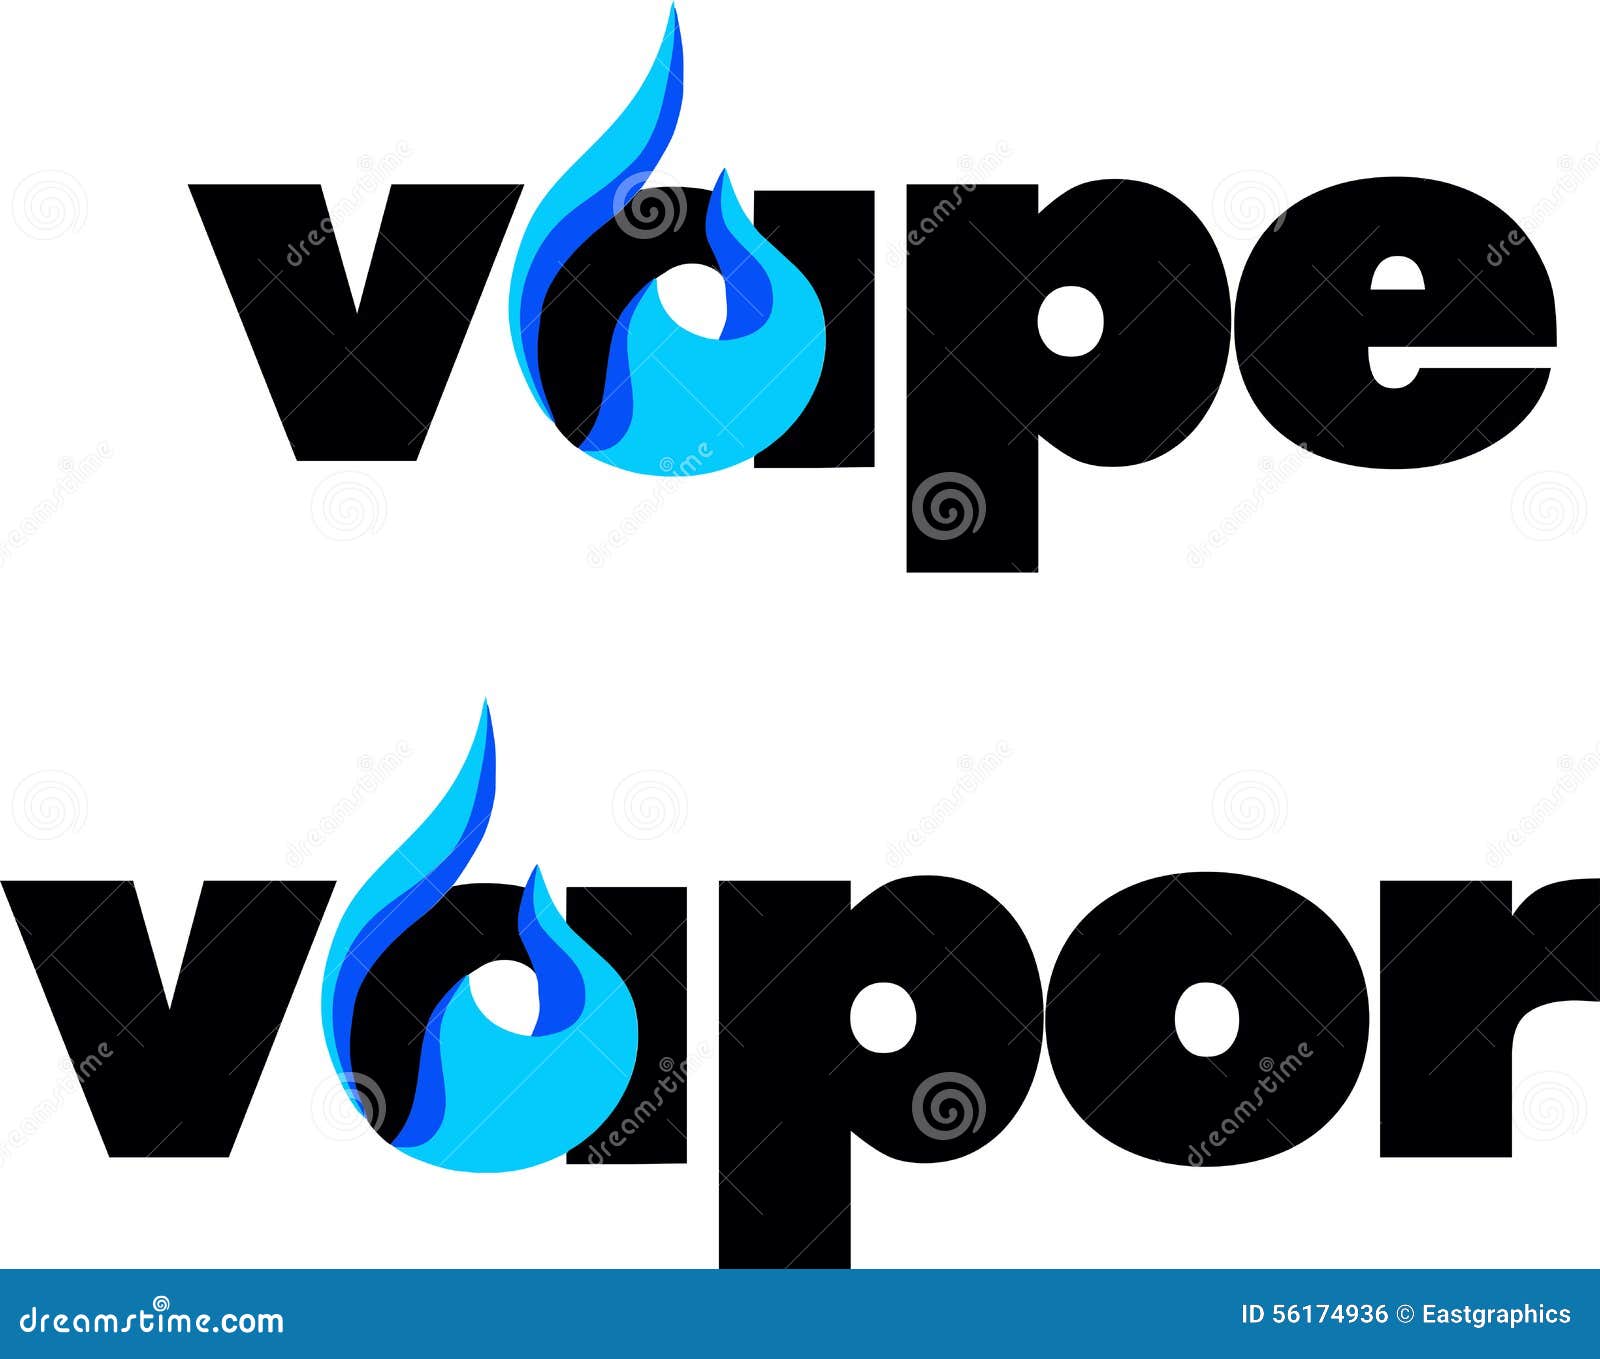 vape, vapor bar logo